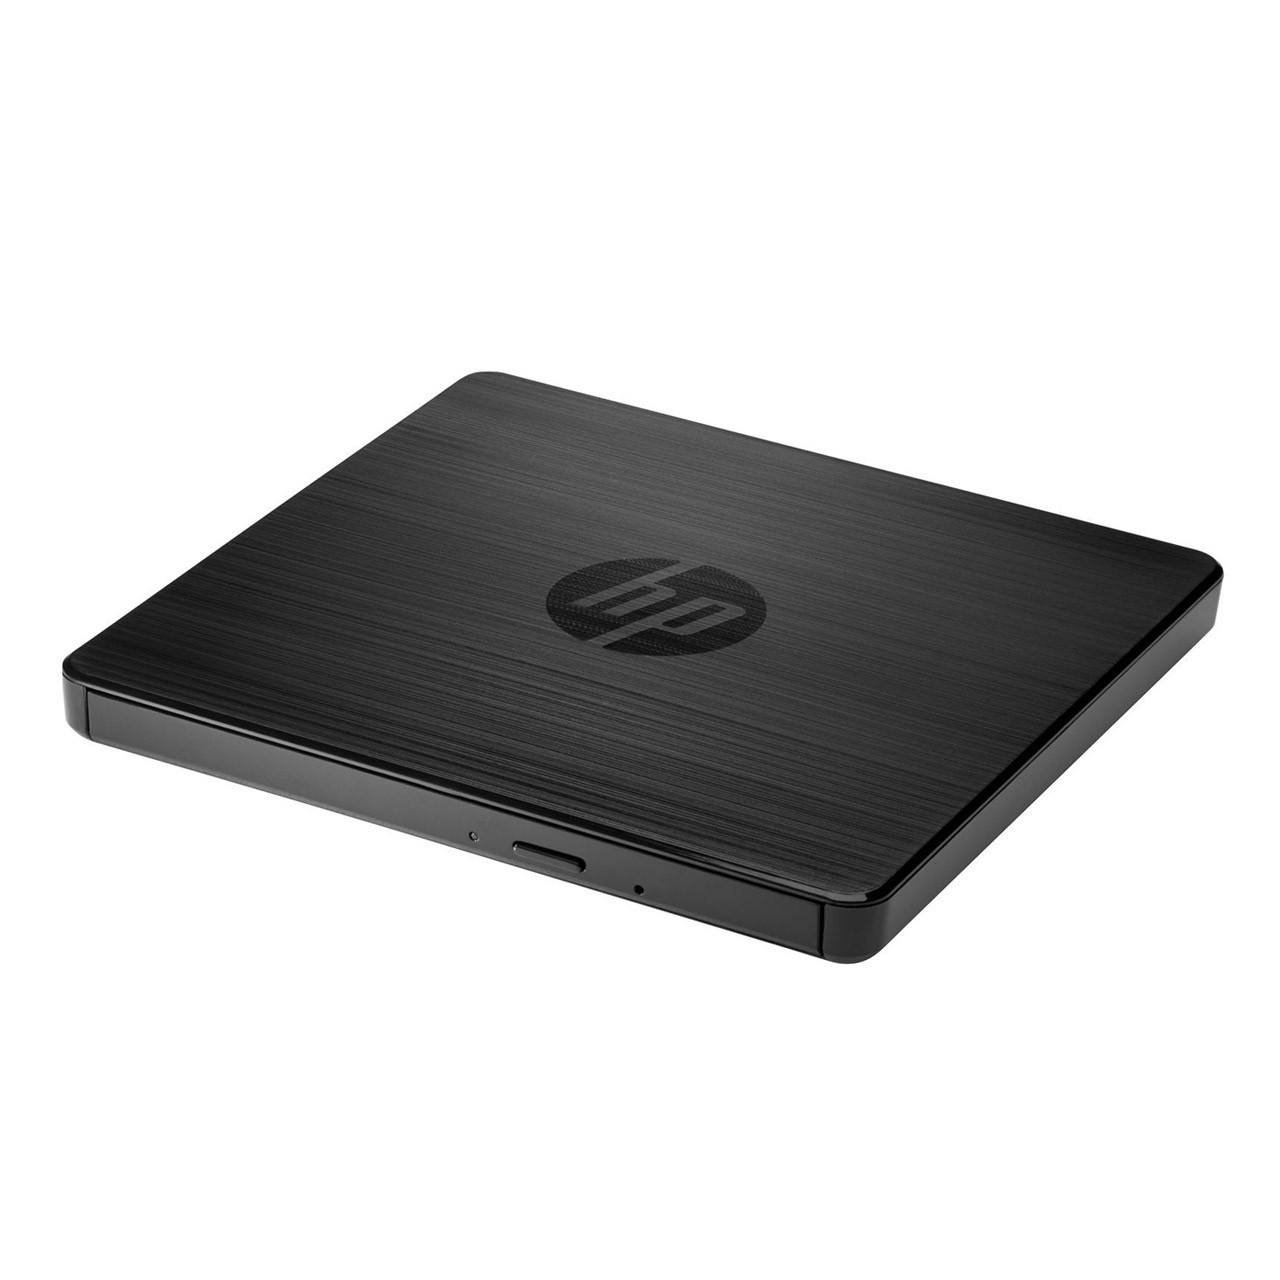 درایو DVD اکسترنال برند HP مدل GP60NB60 

HP USB External DVD-RW Drive GP60NB60